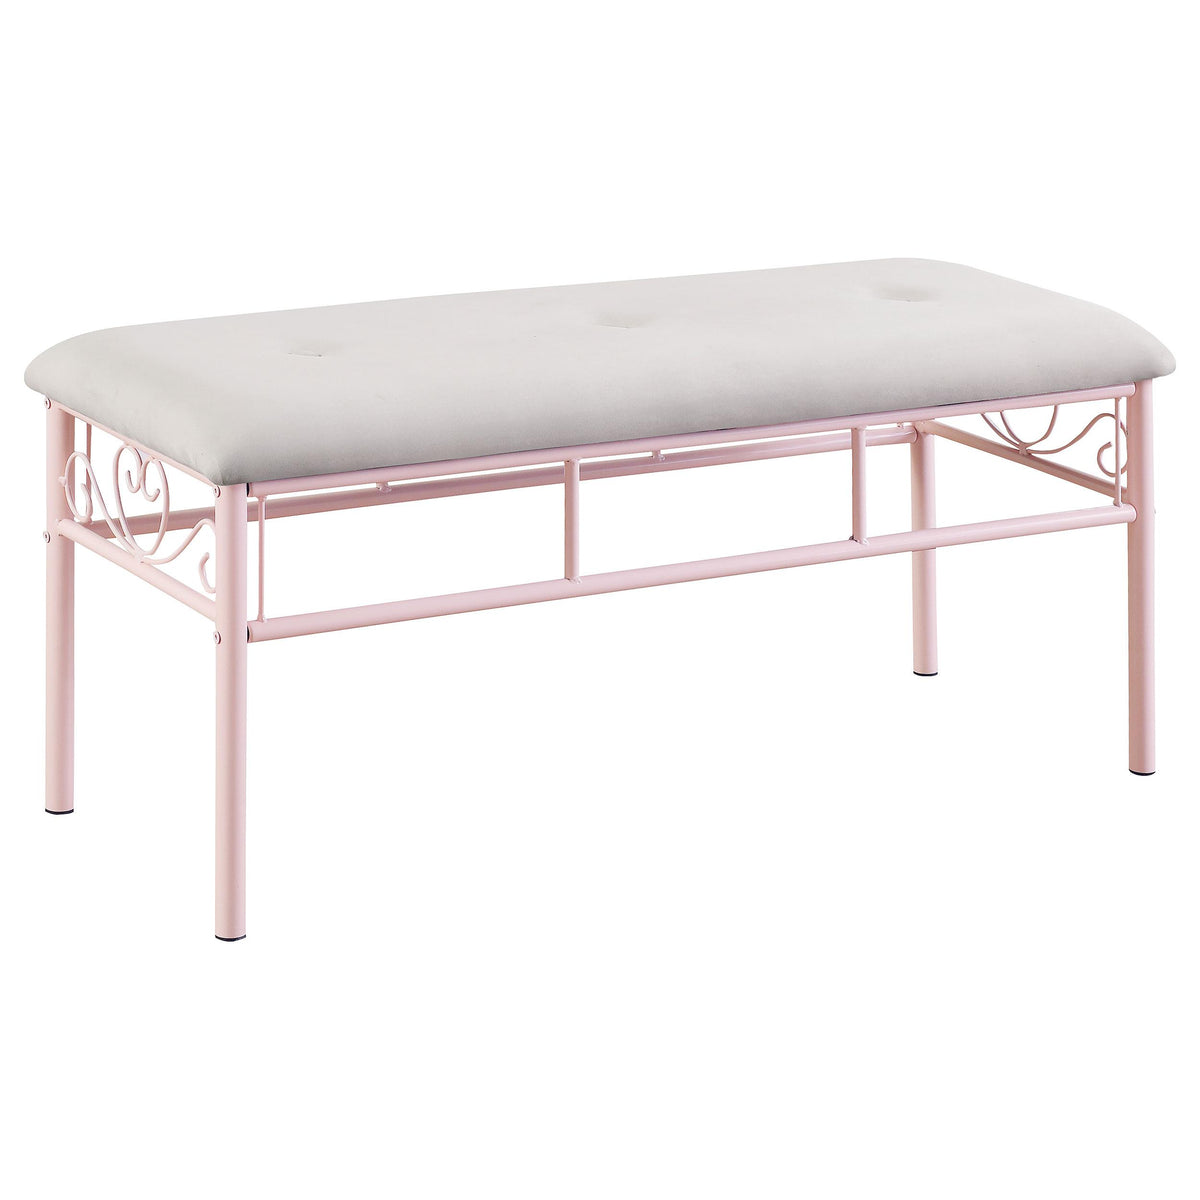 Massi Tufted Upholstered Bench Powder Pink  Las Vegas Furniture Stores